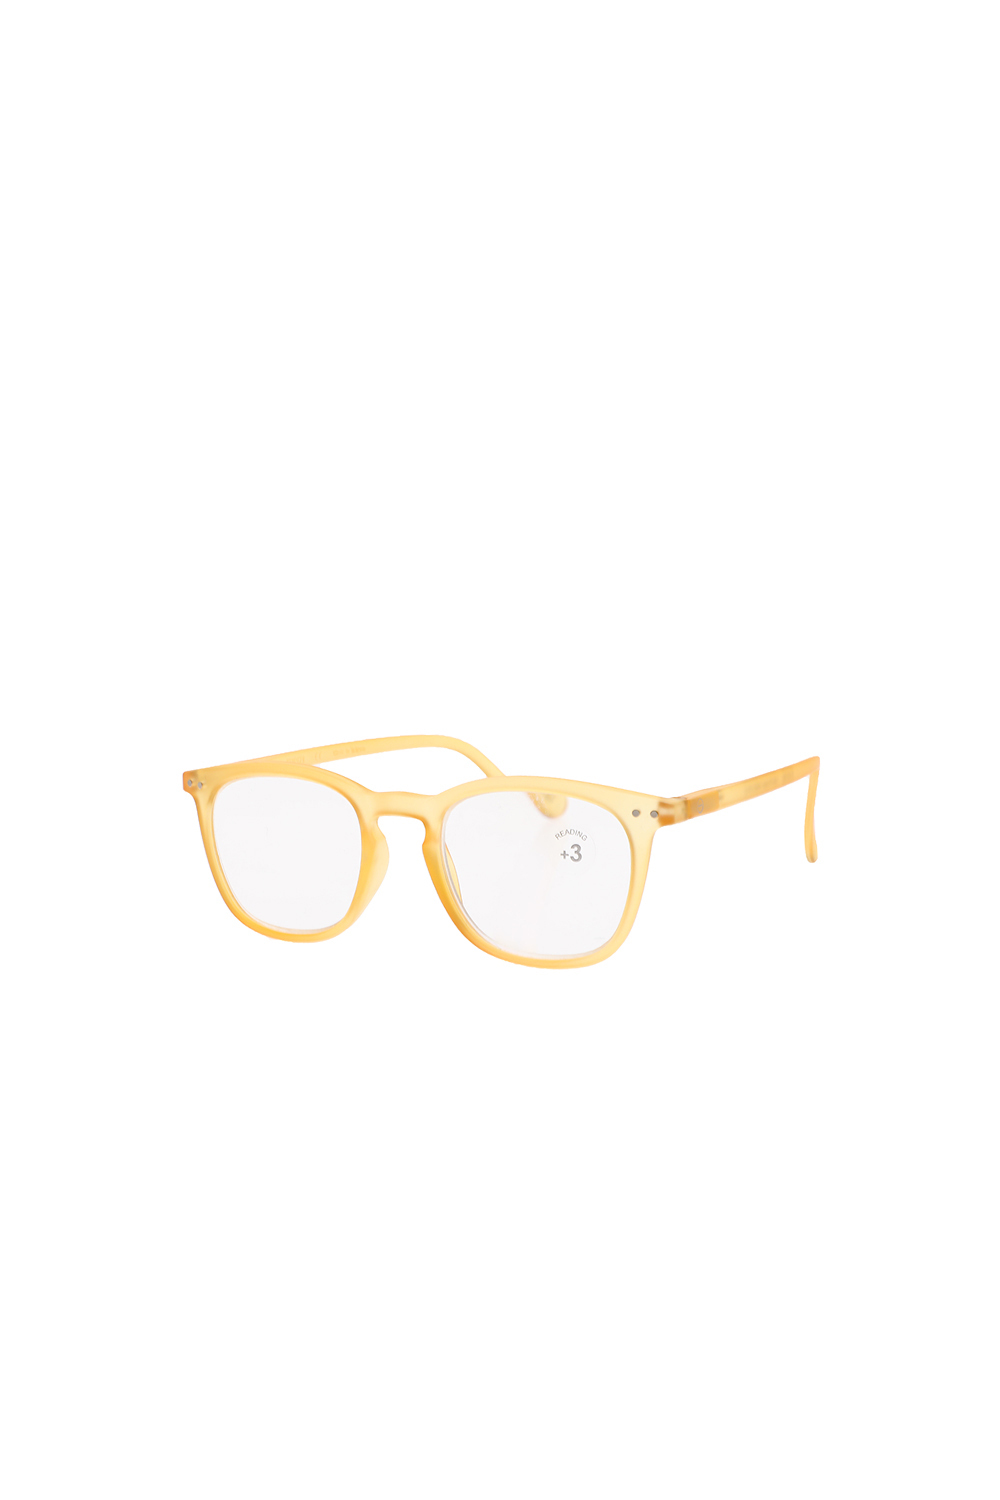 IZIPIZI - Unisex γυαλιά οράσεως IZIPIZI READING #E κίτρινα Γυναικεία/Αξεσουάρ/Γυαλιά/Οράσεως